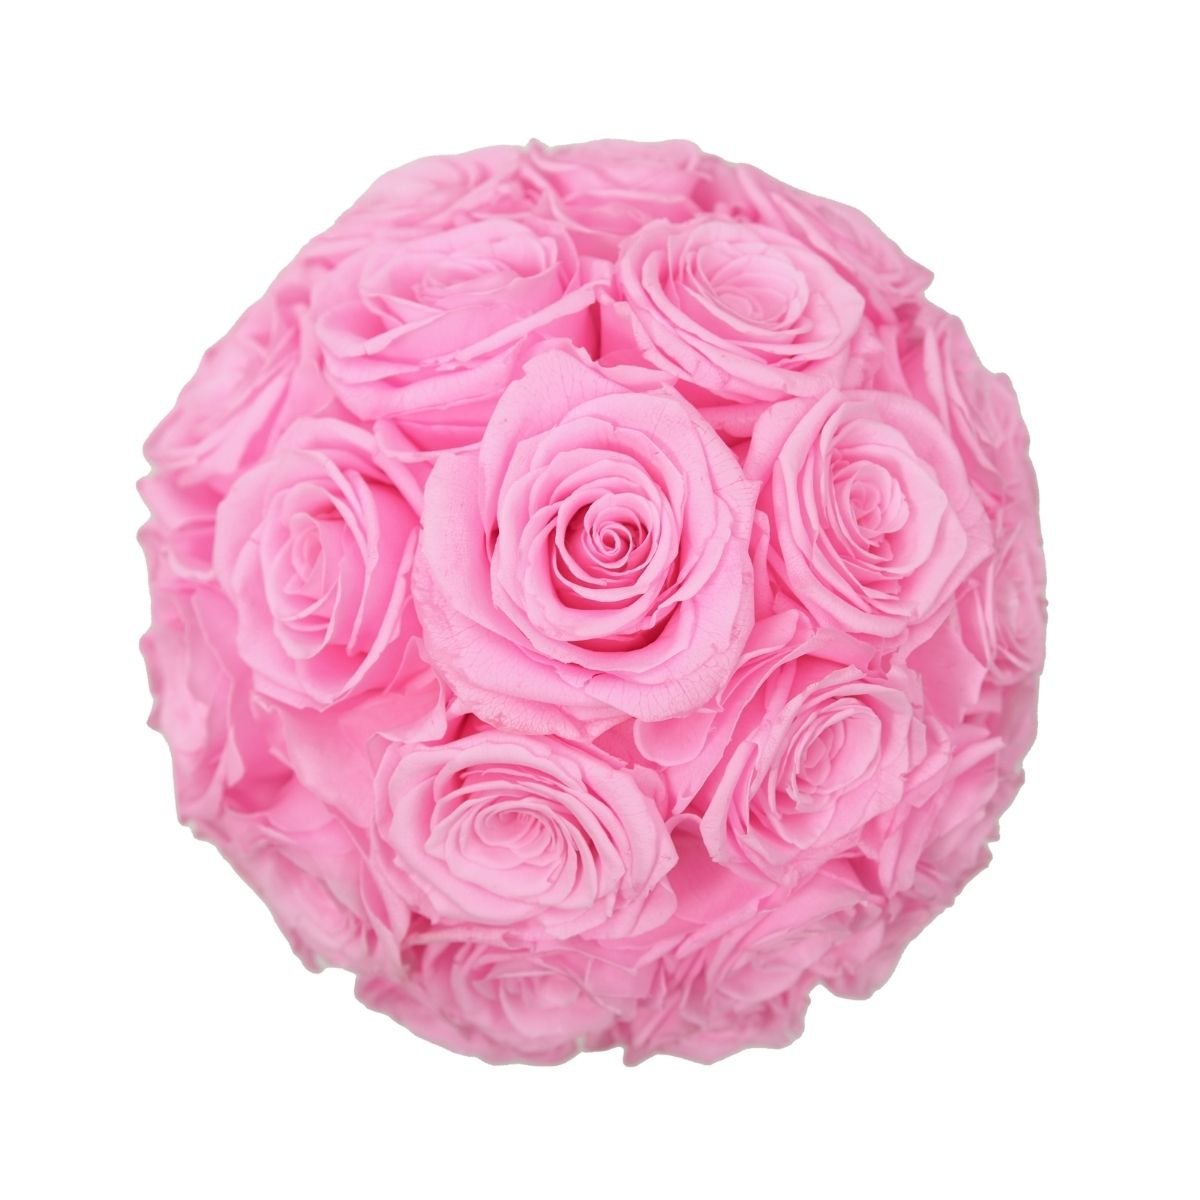 Buy Classic Bucket Full Of Preserved Rose - Pink / Black | Flower ...